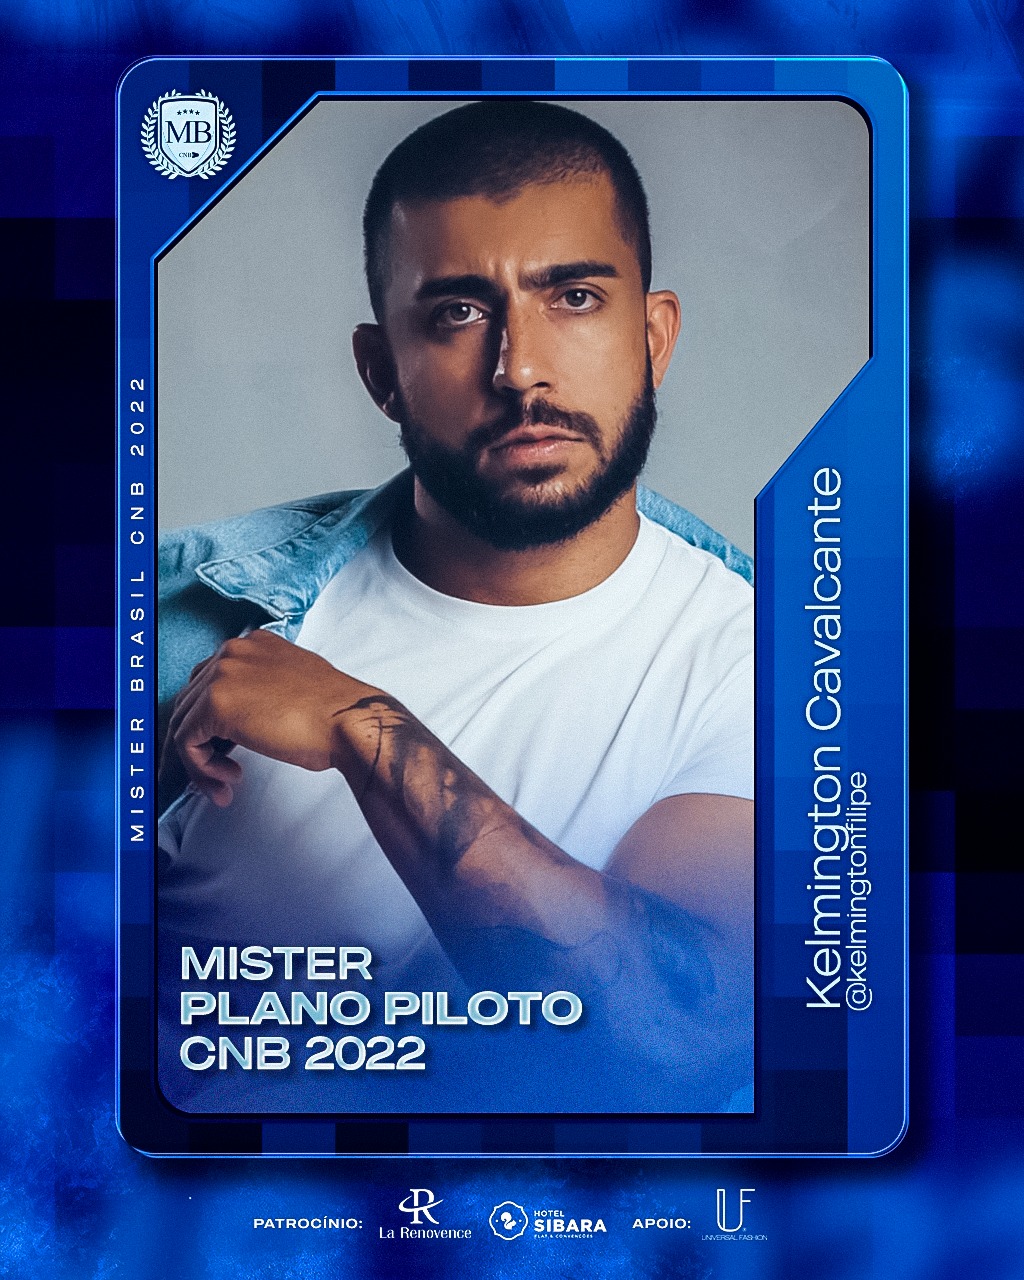 Mister Brasil CNB 2022 is Mister Caminhos do Contestado - Page 3 27882510